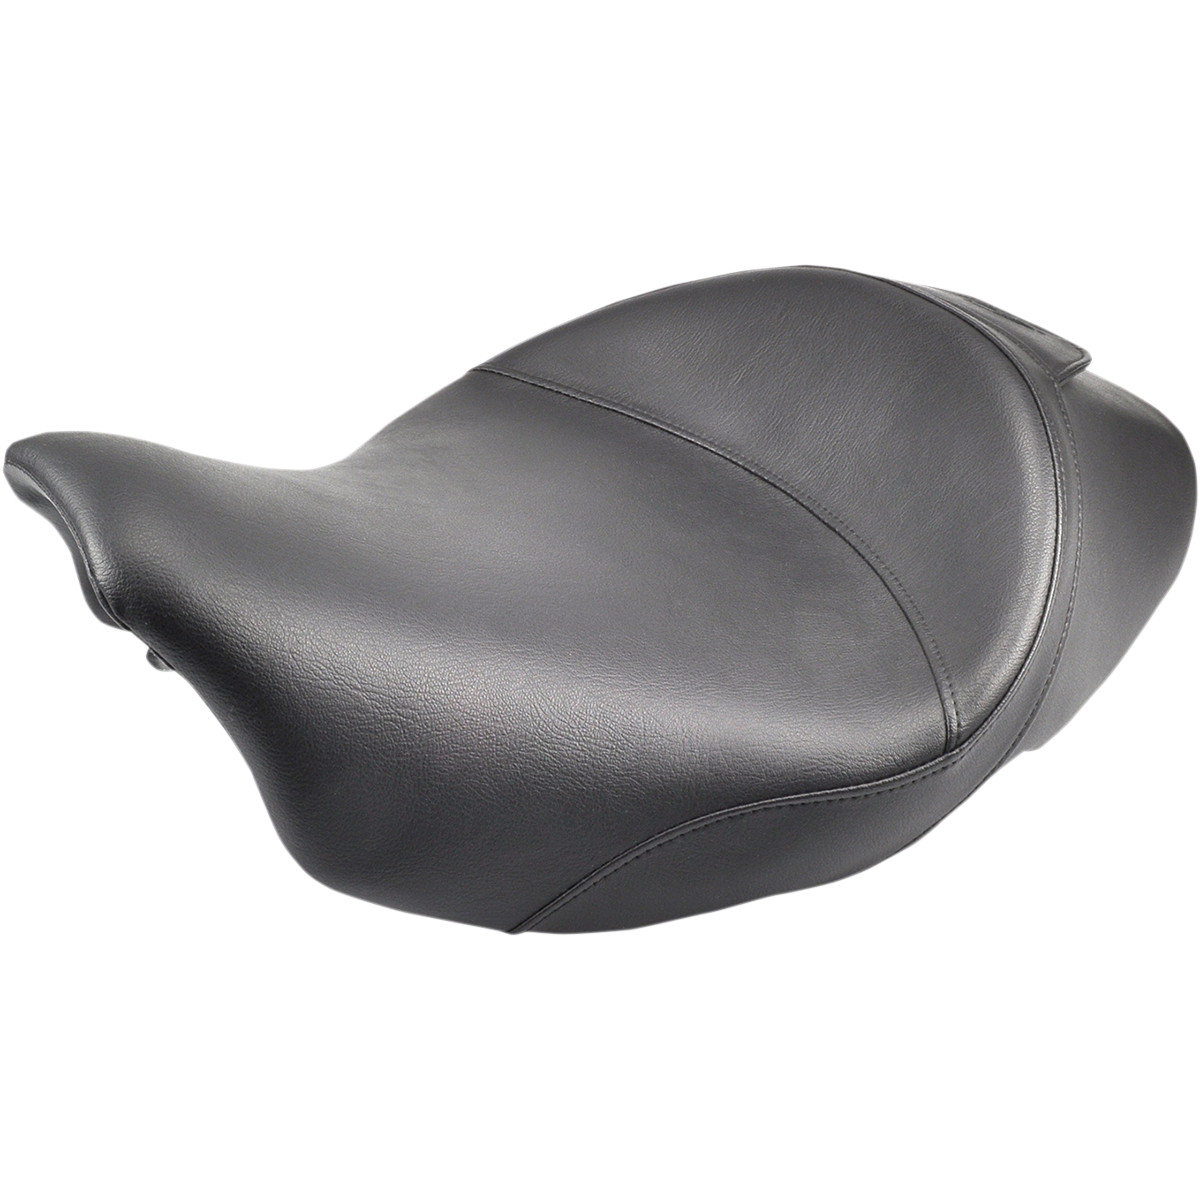 HARLEY DAVIDSON FLHR SOLO SEAT RENEGADE™ DELUXE FRONT SADDLEHYDE™|SADDLEGEL™ PLAIN BLACK W/O STUDS